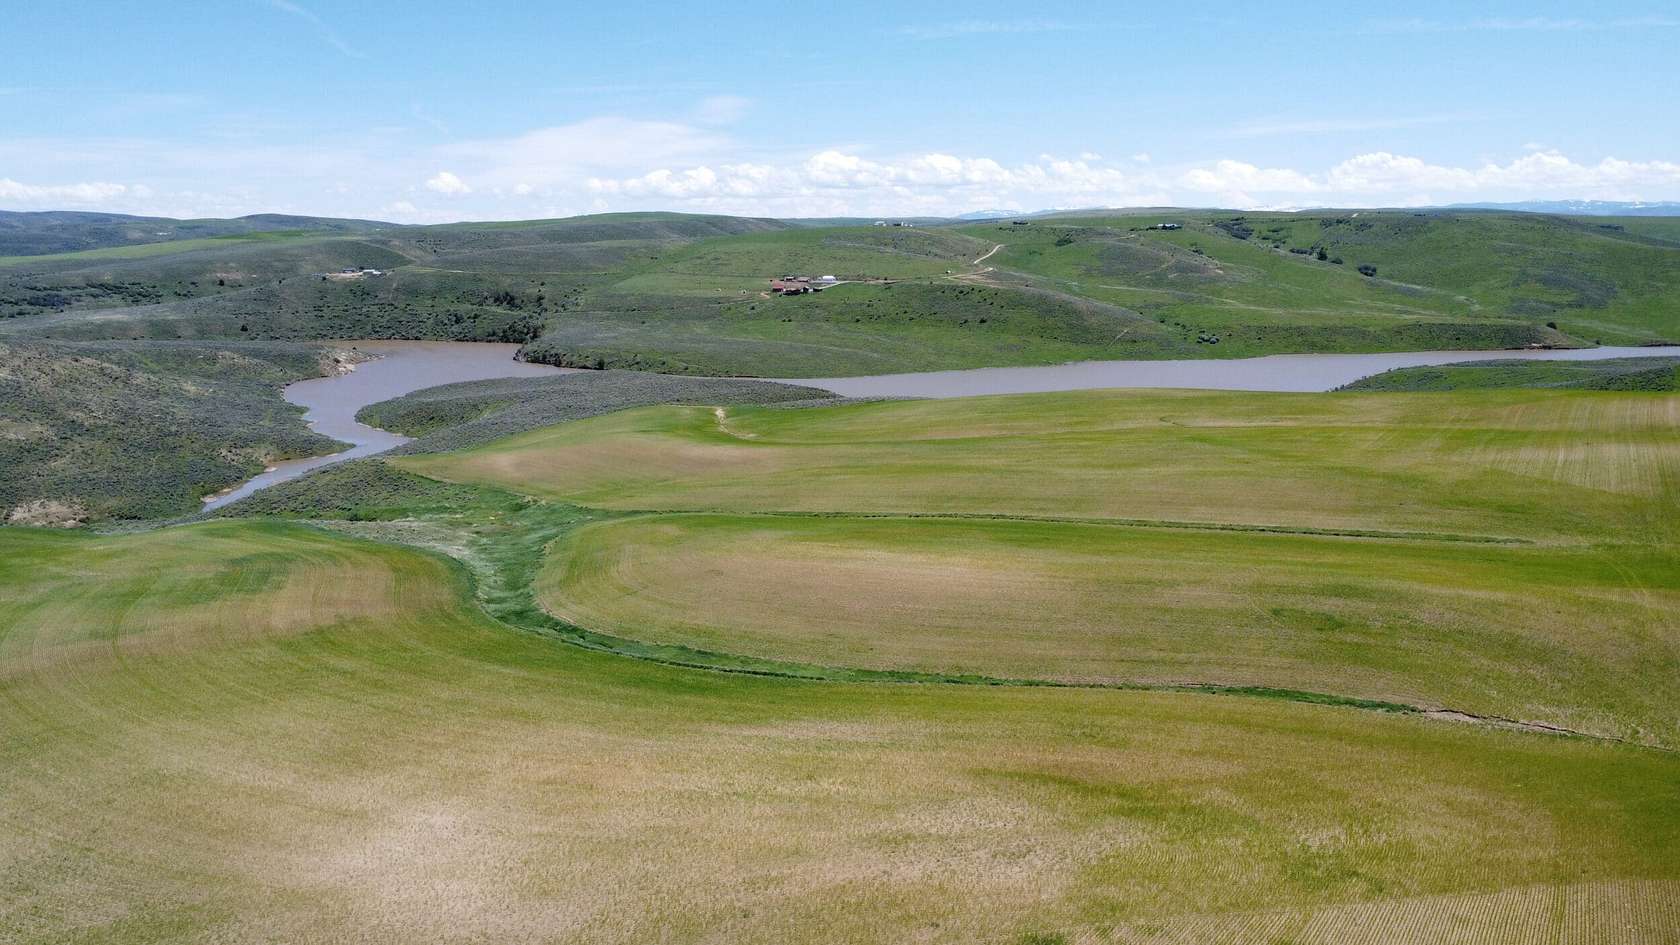 396 Acres of Recreational Land & Farm for Sale in Craig, Colorado